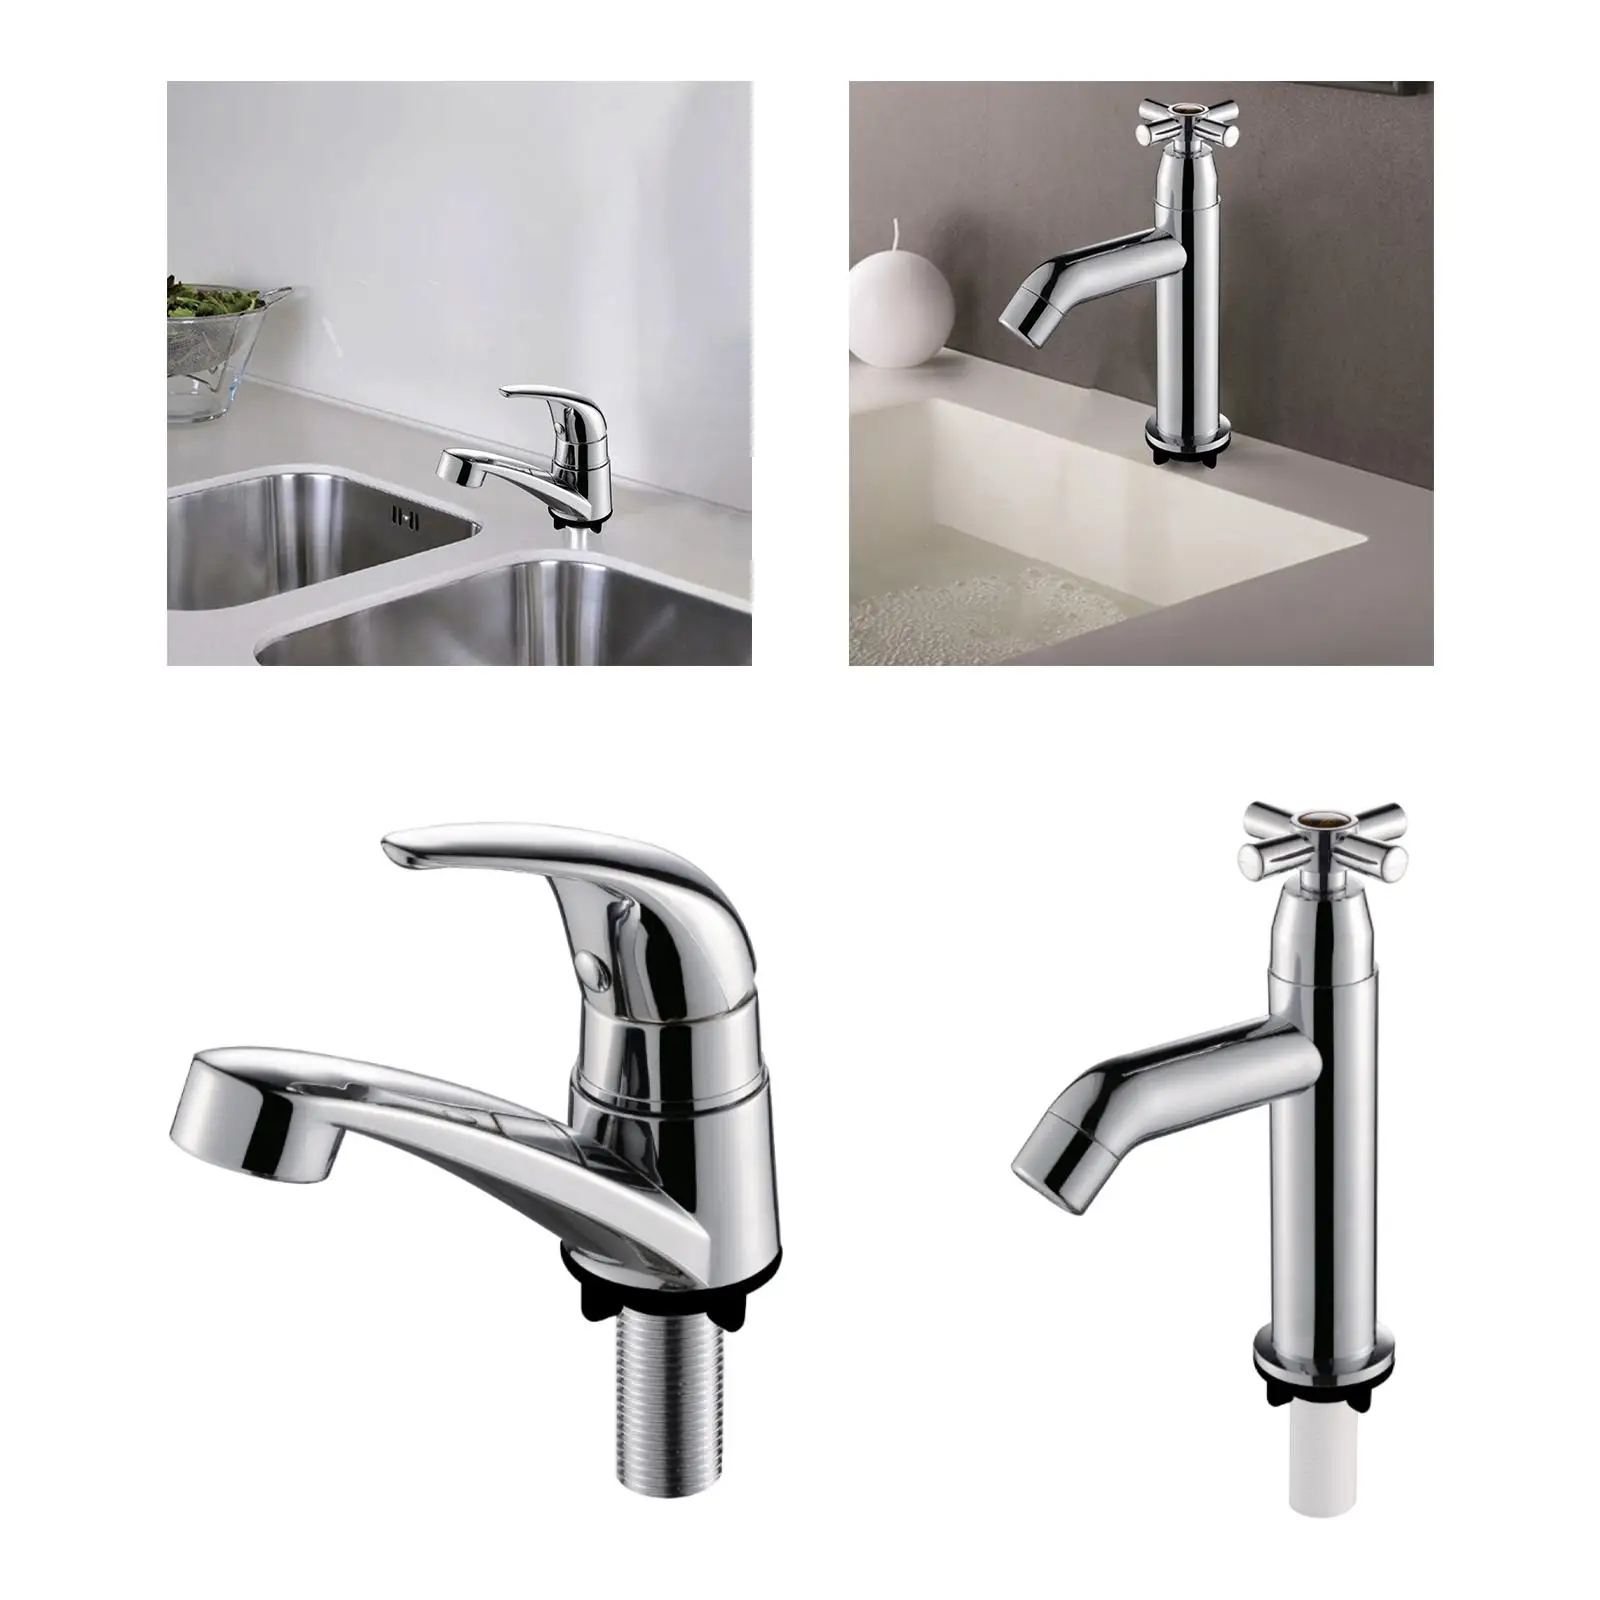 Water Faucet, Washing Machine Faucet, Wall Mounted Drop Resistant Washing